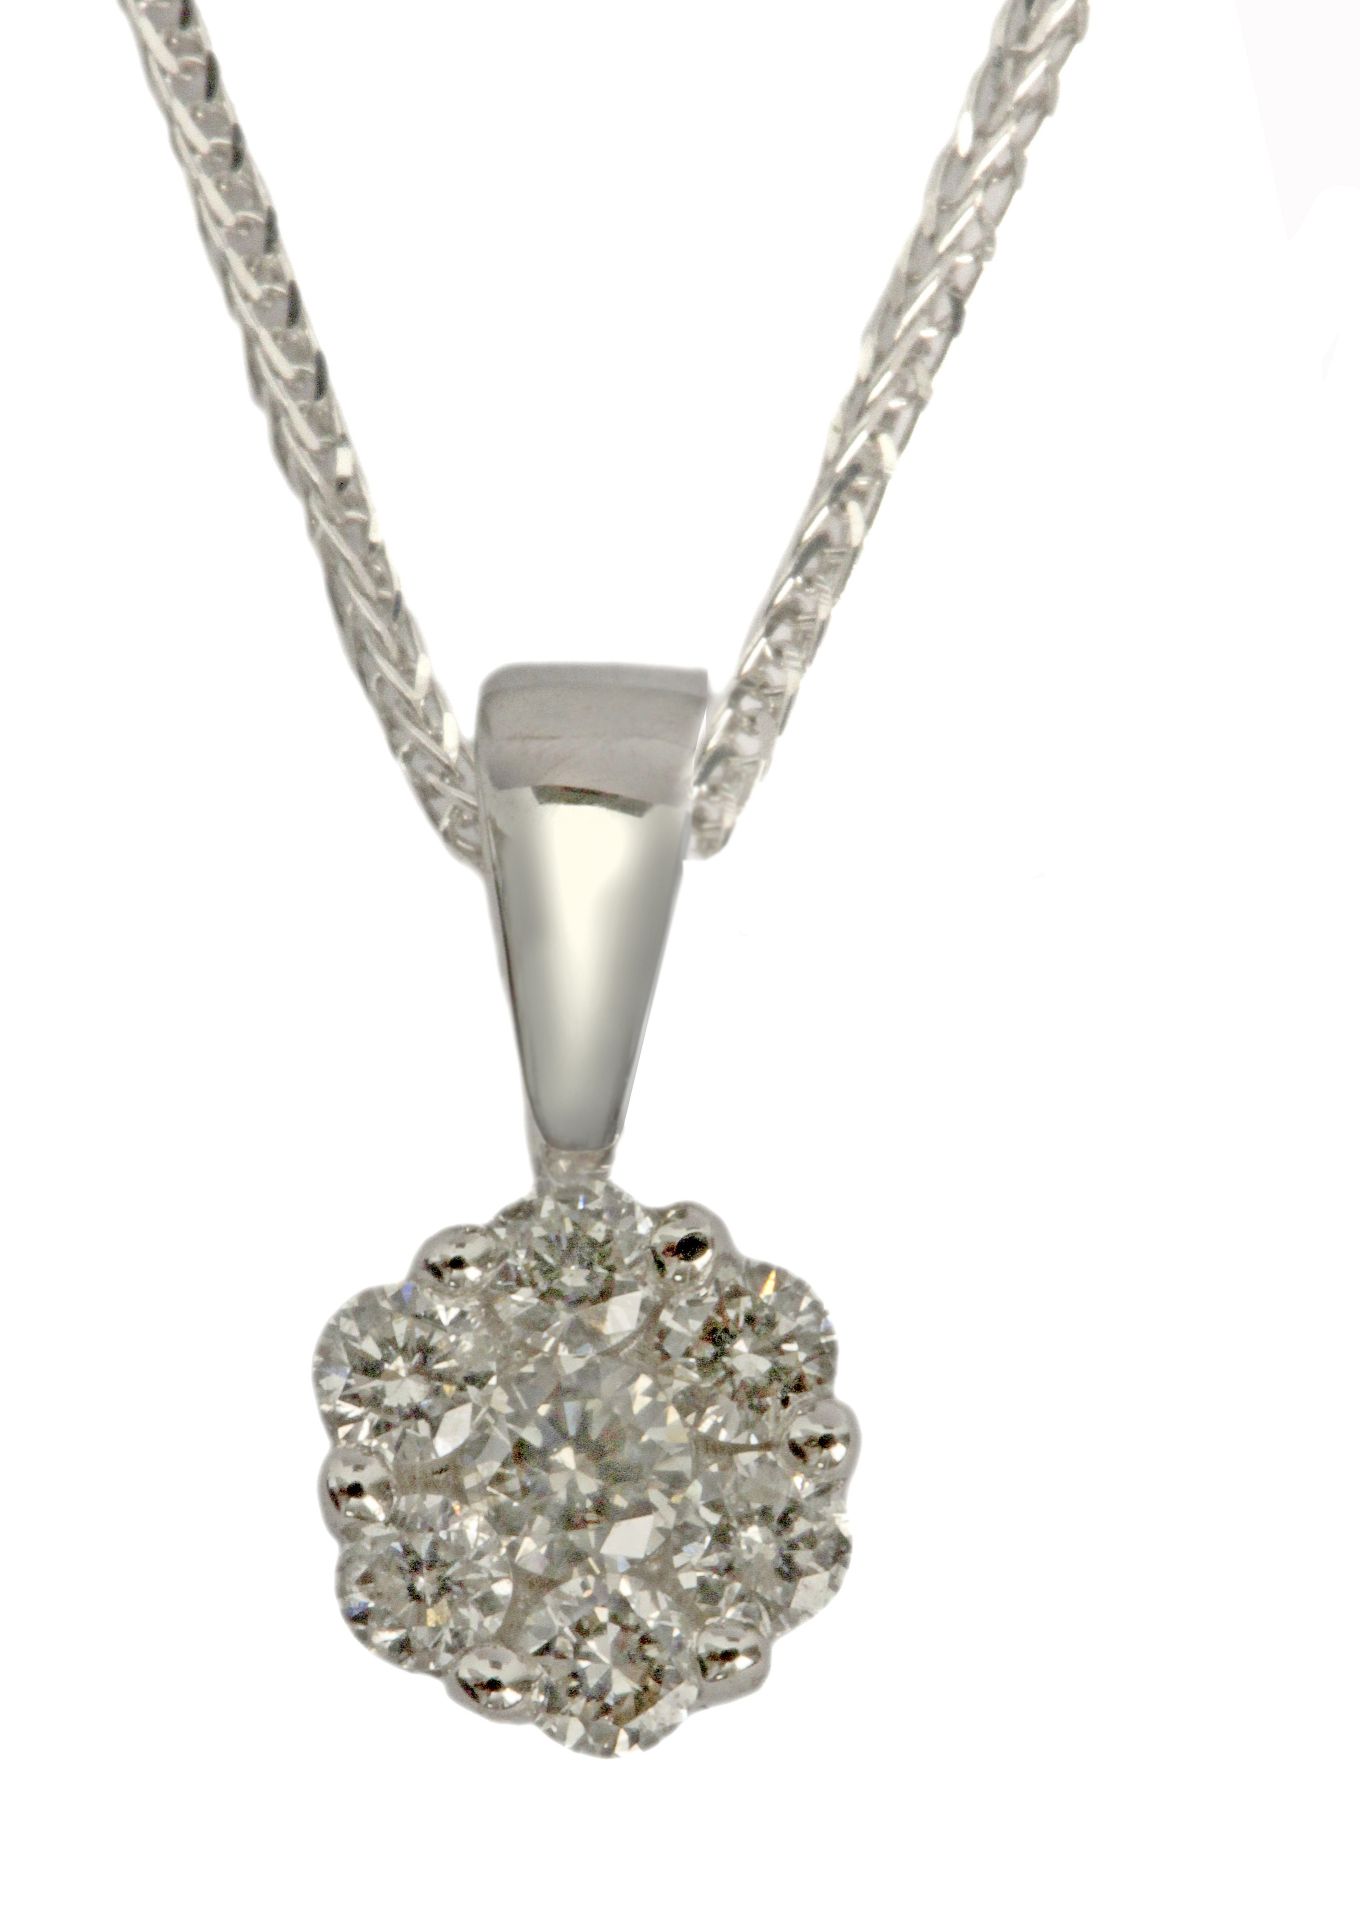 A brilliant cut diamonds cluster pendant in a white gold setting and a white gold chain